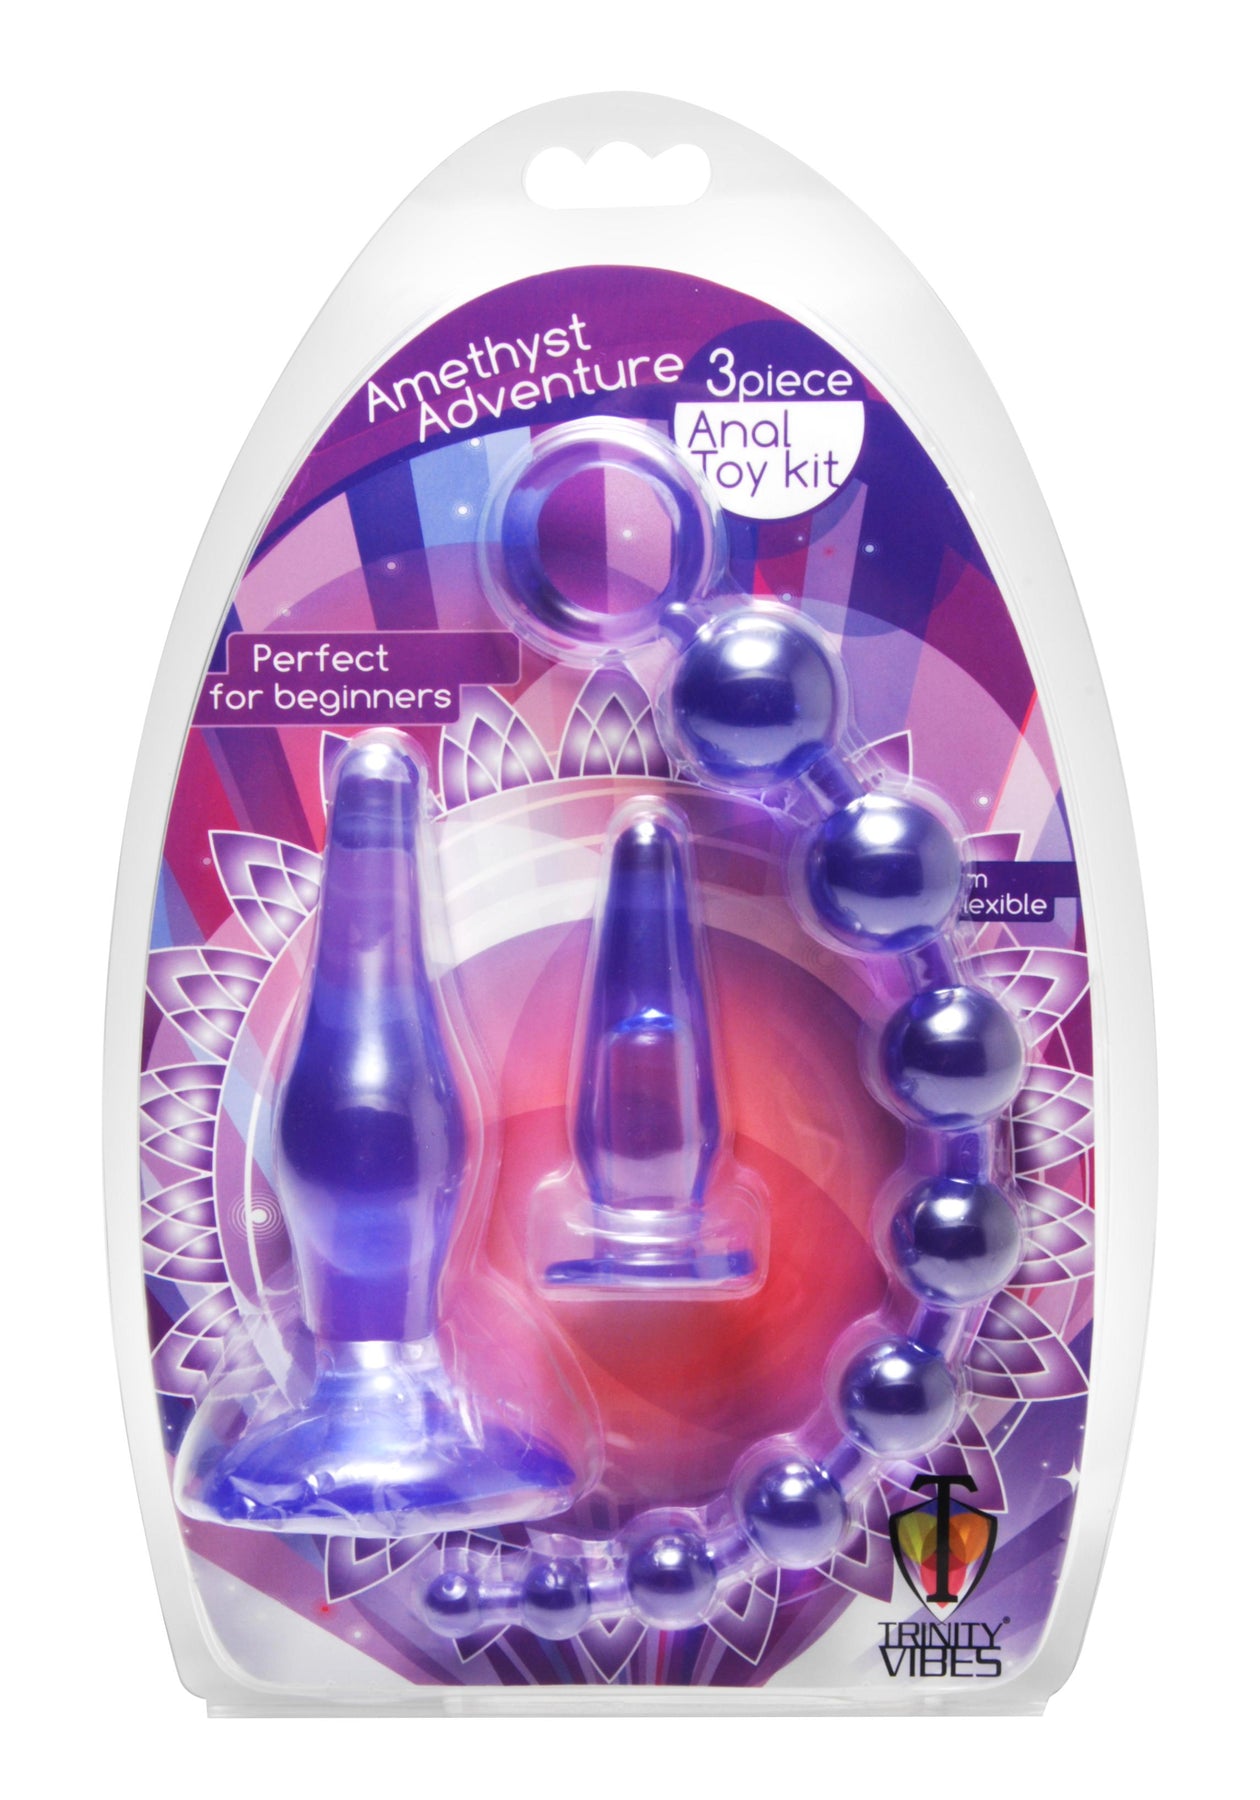 Anal beads butt plug toy erotic kit 